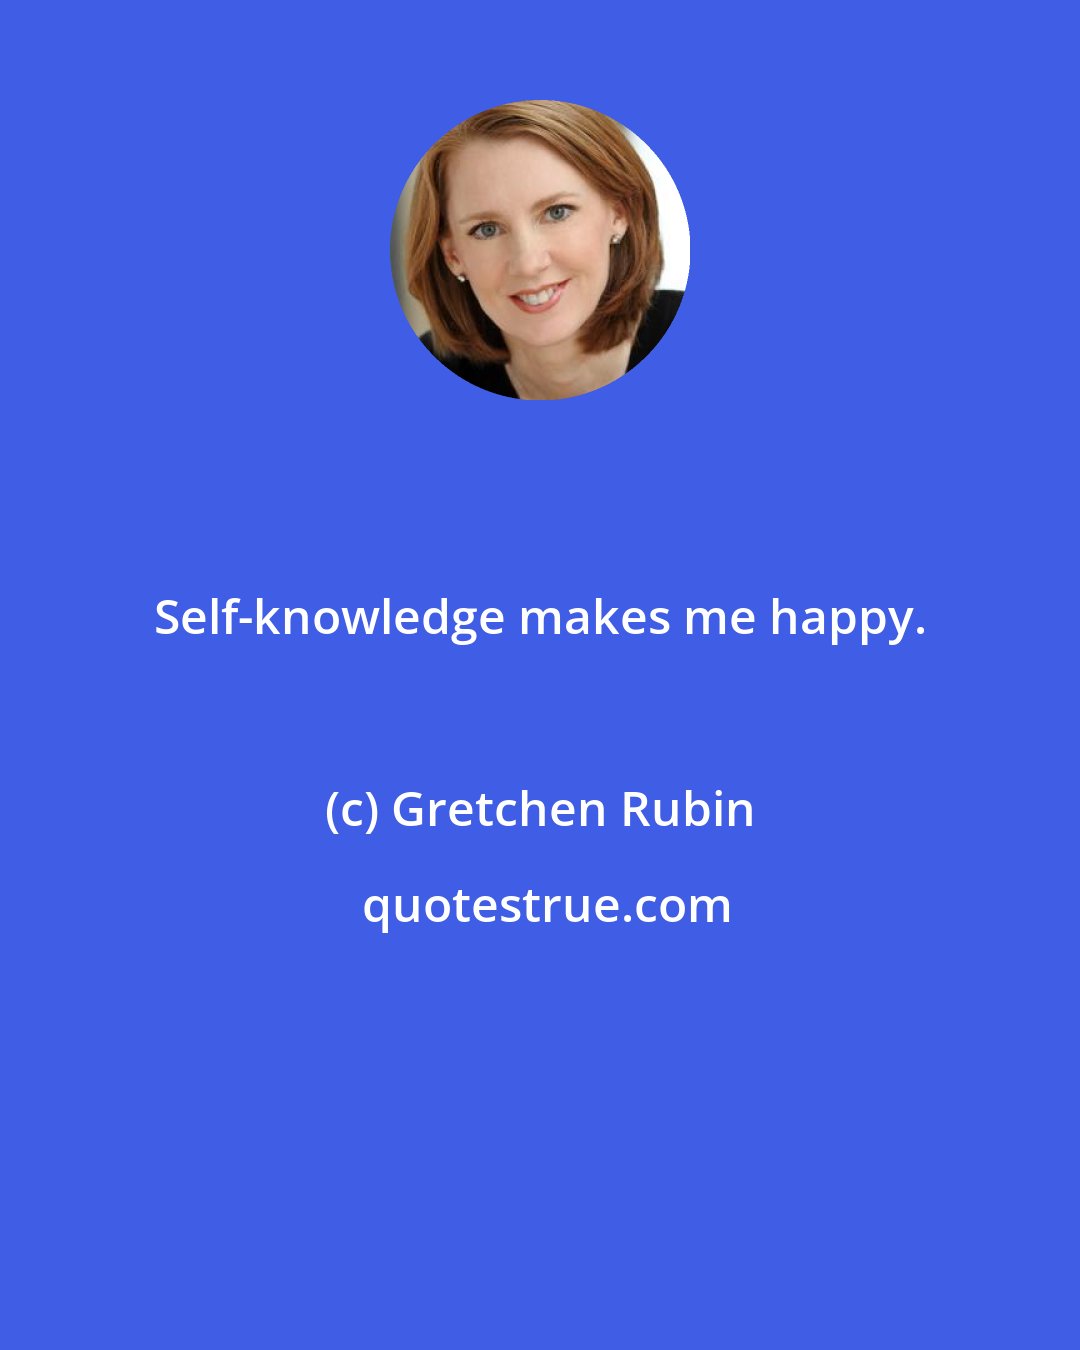 Gretchen Rubin: Self-knowledge makes me happy.